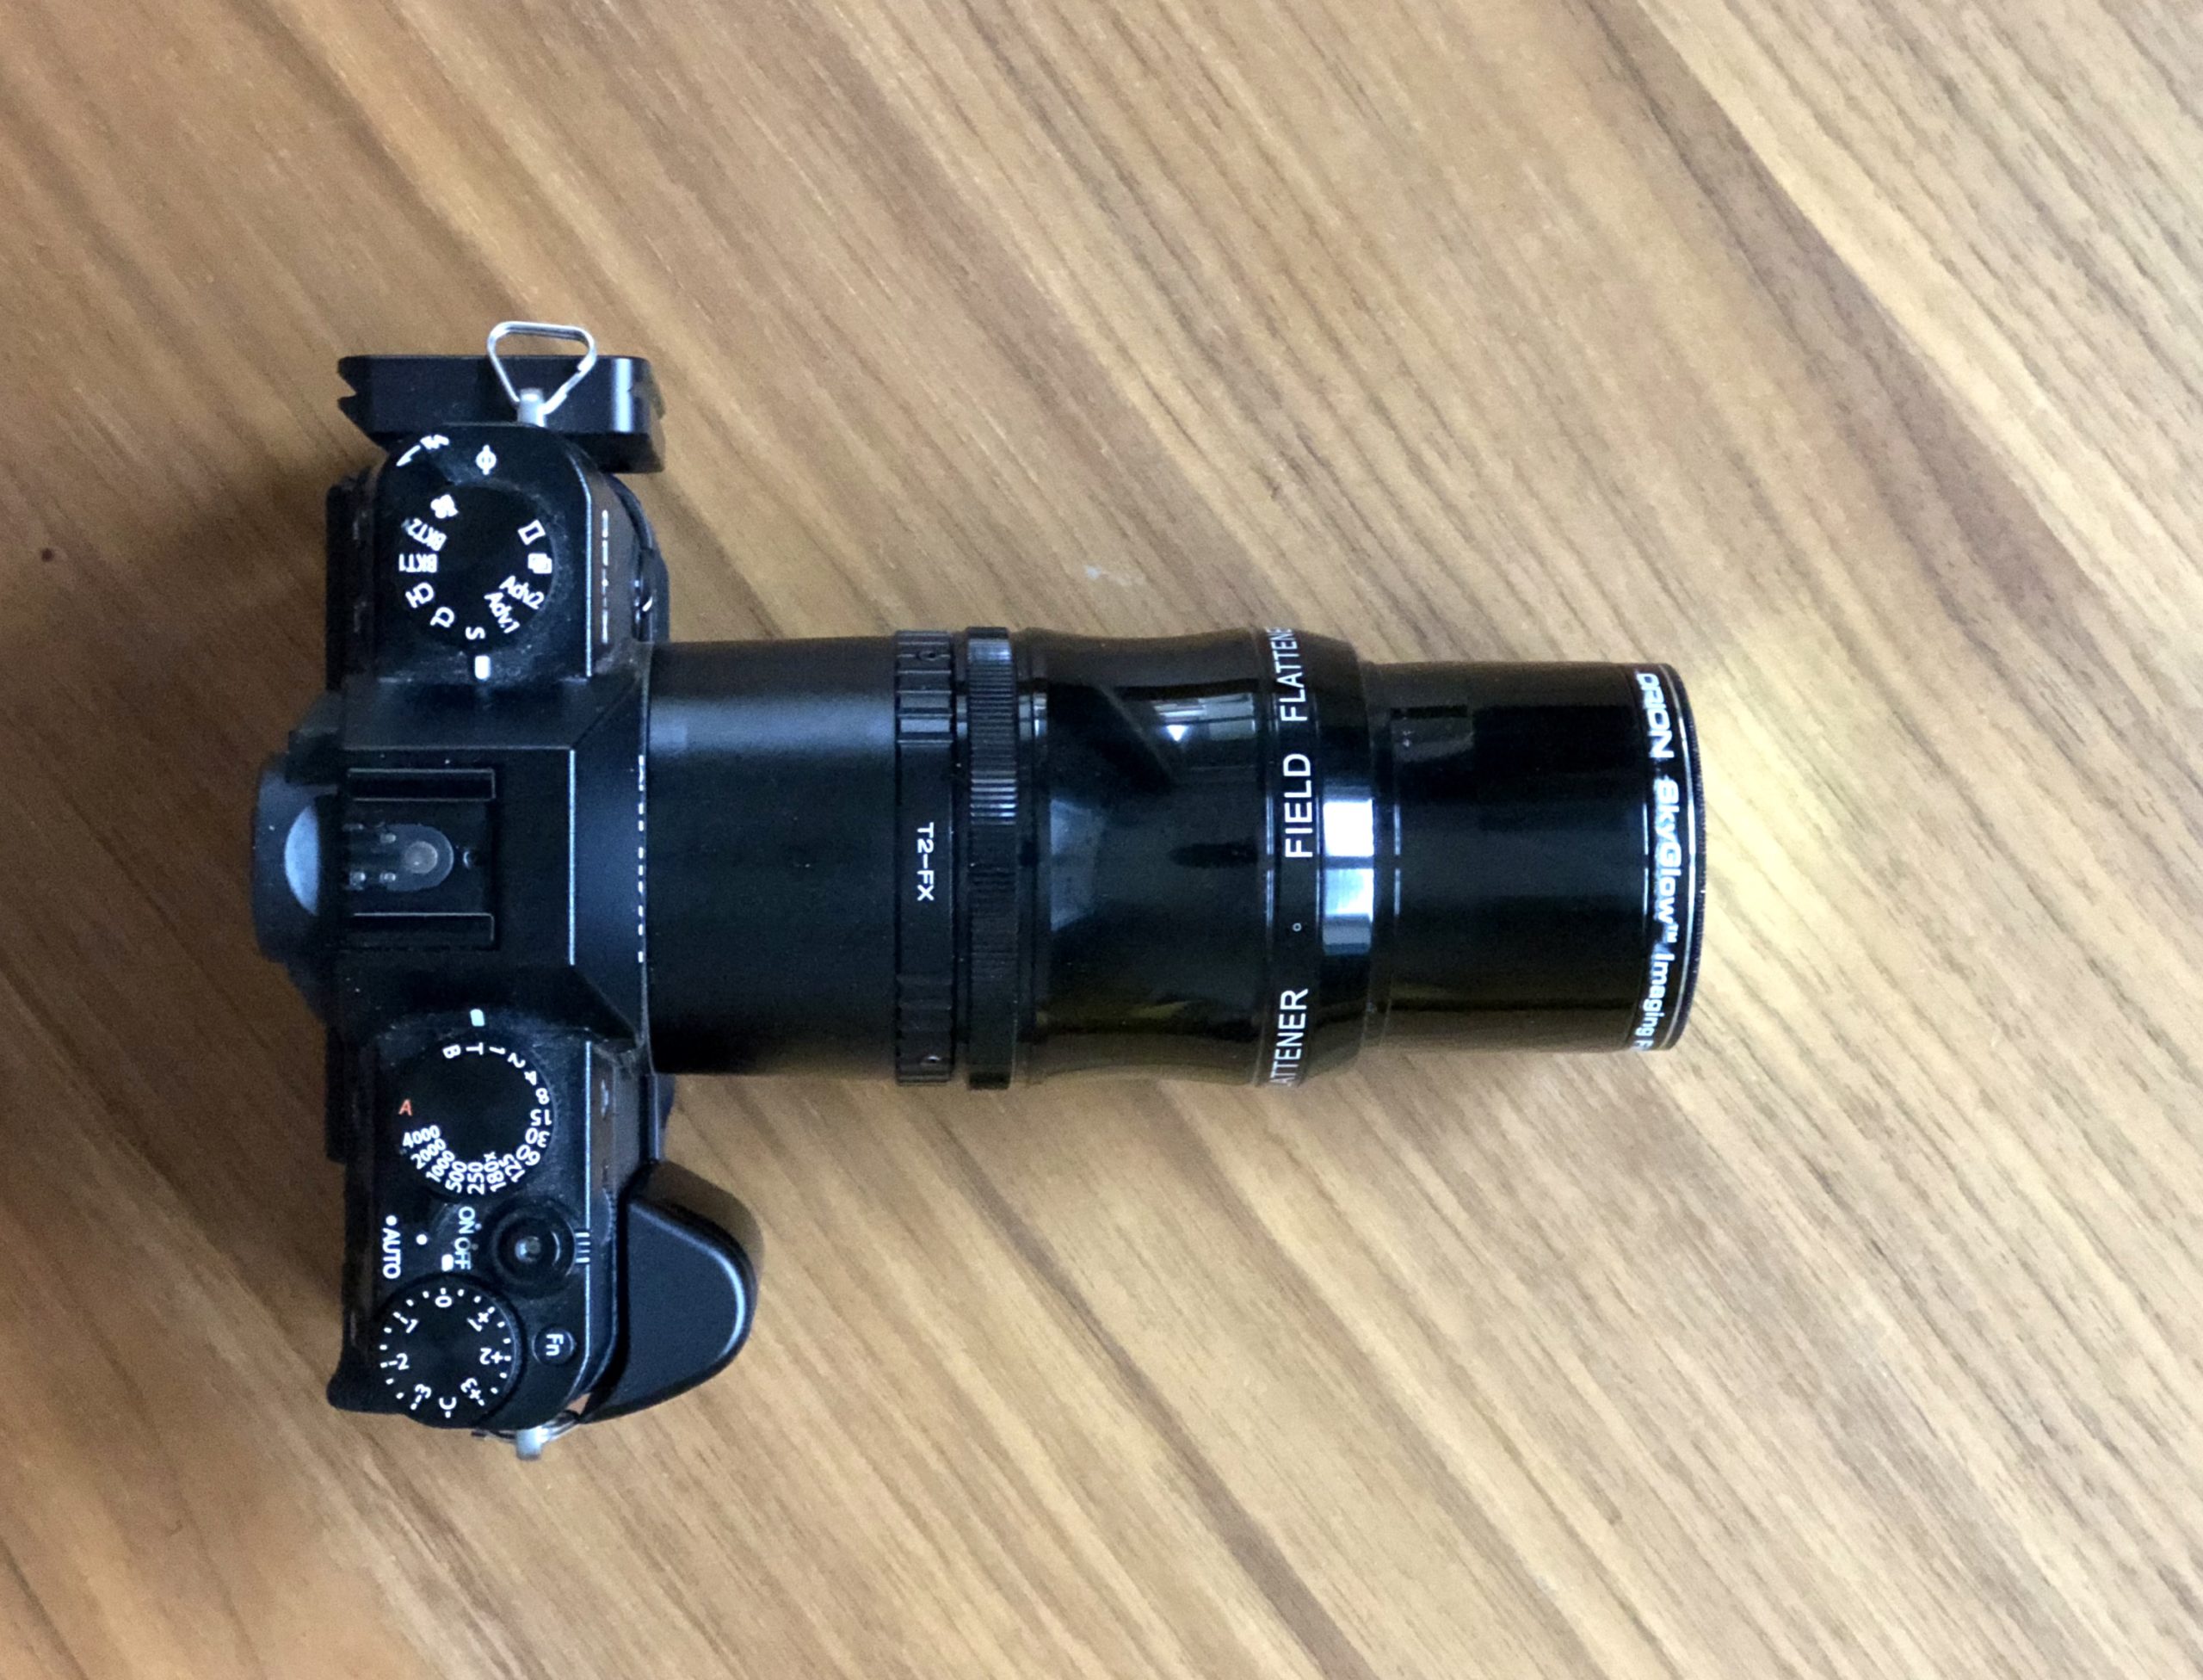 Fujifilm X-T20 telescope accessories